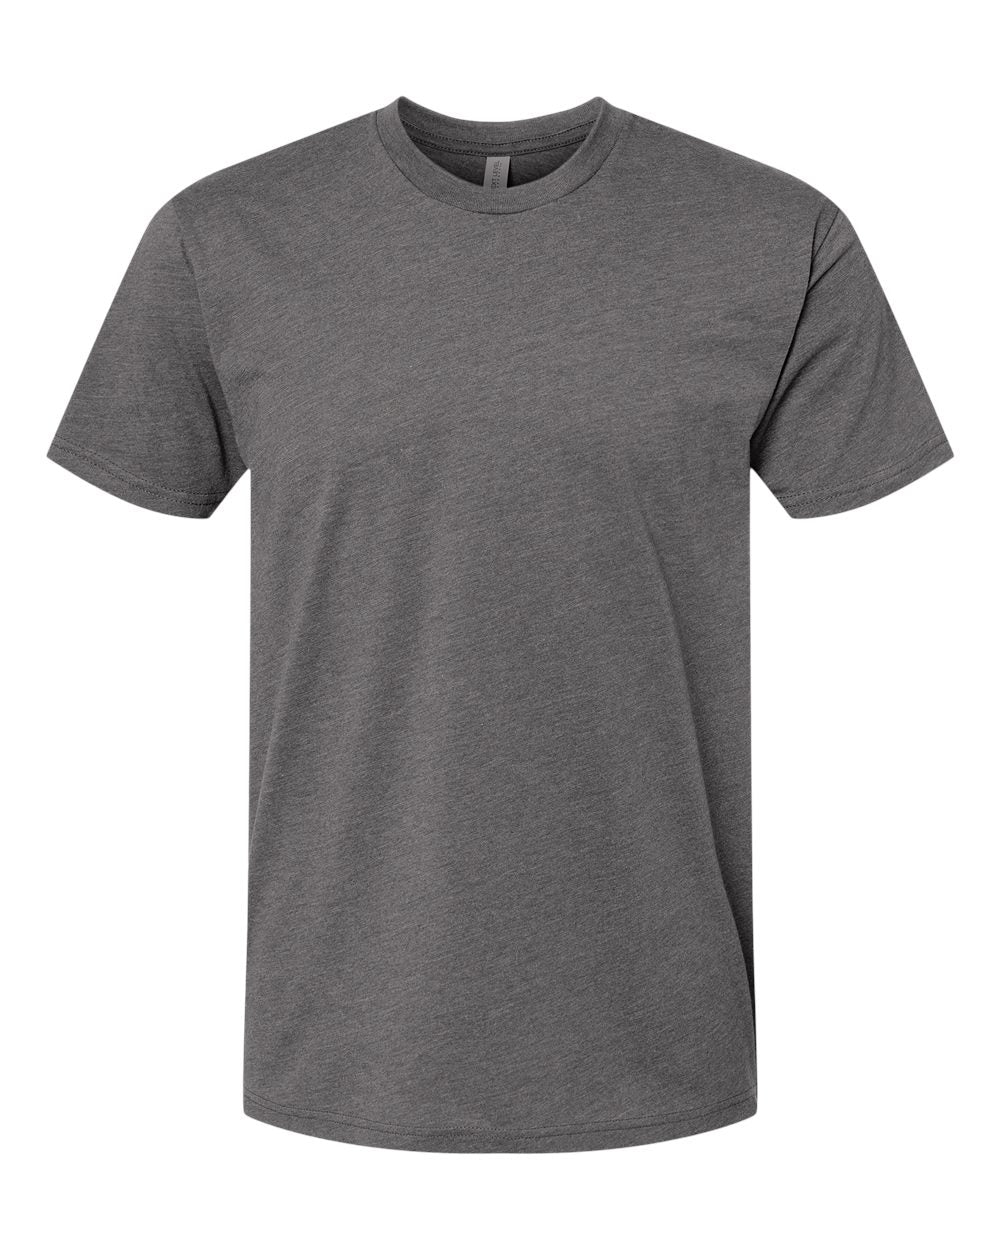 AMPR Design 4 t-Shirt